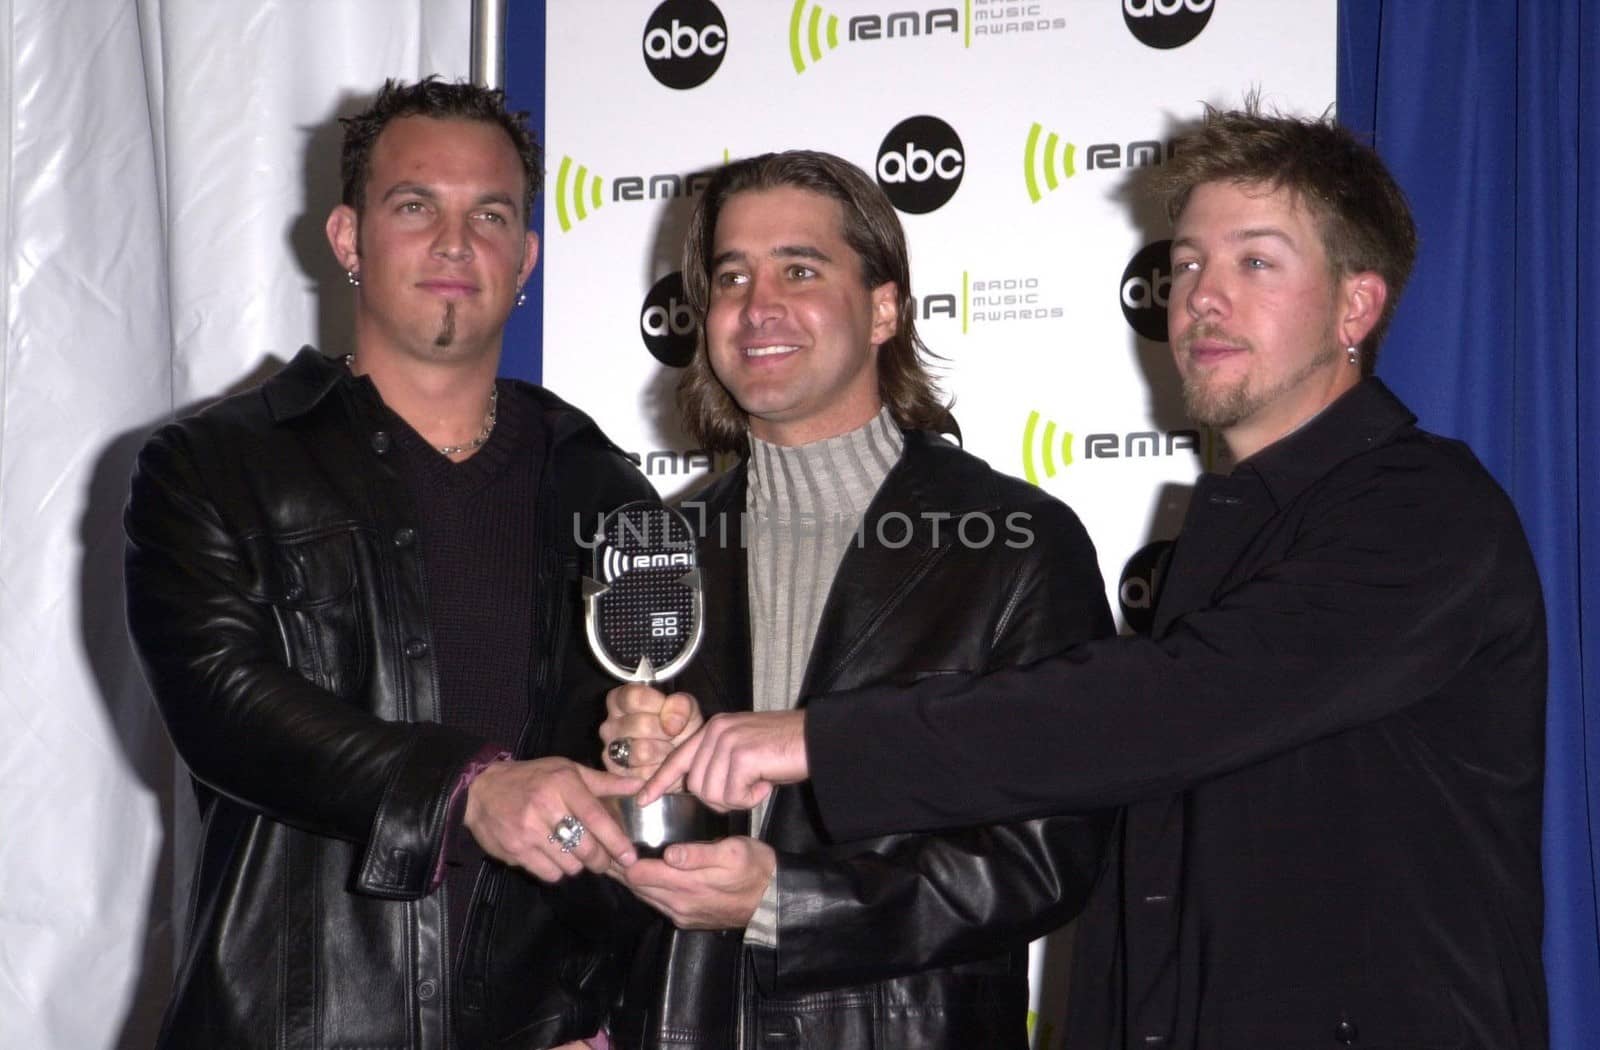 Creed at the 2000 Radio Music Awards held at the Aladdin Hotel, Las Vegas, 11-01-00